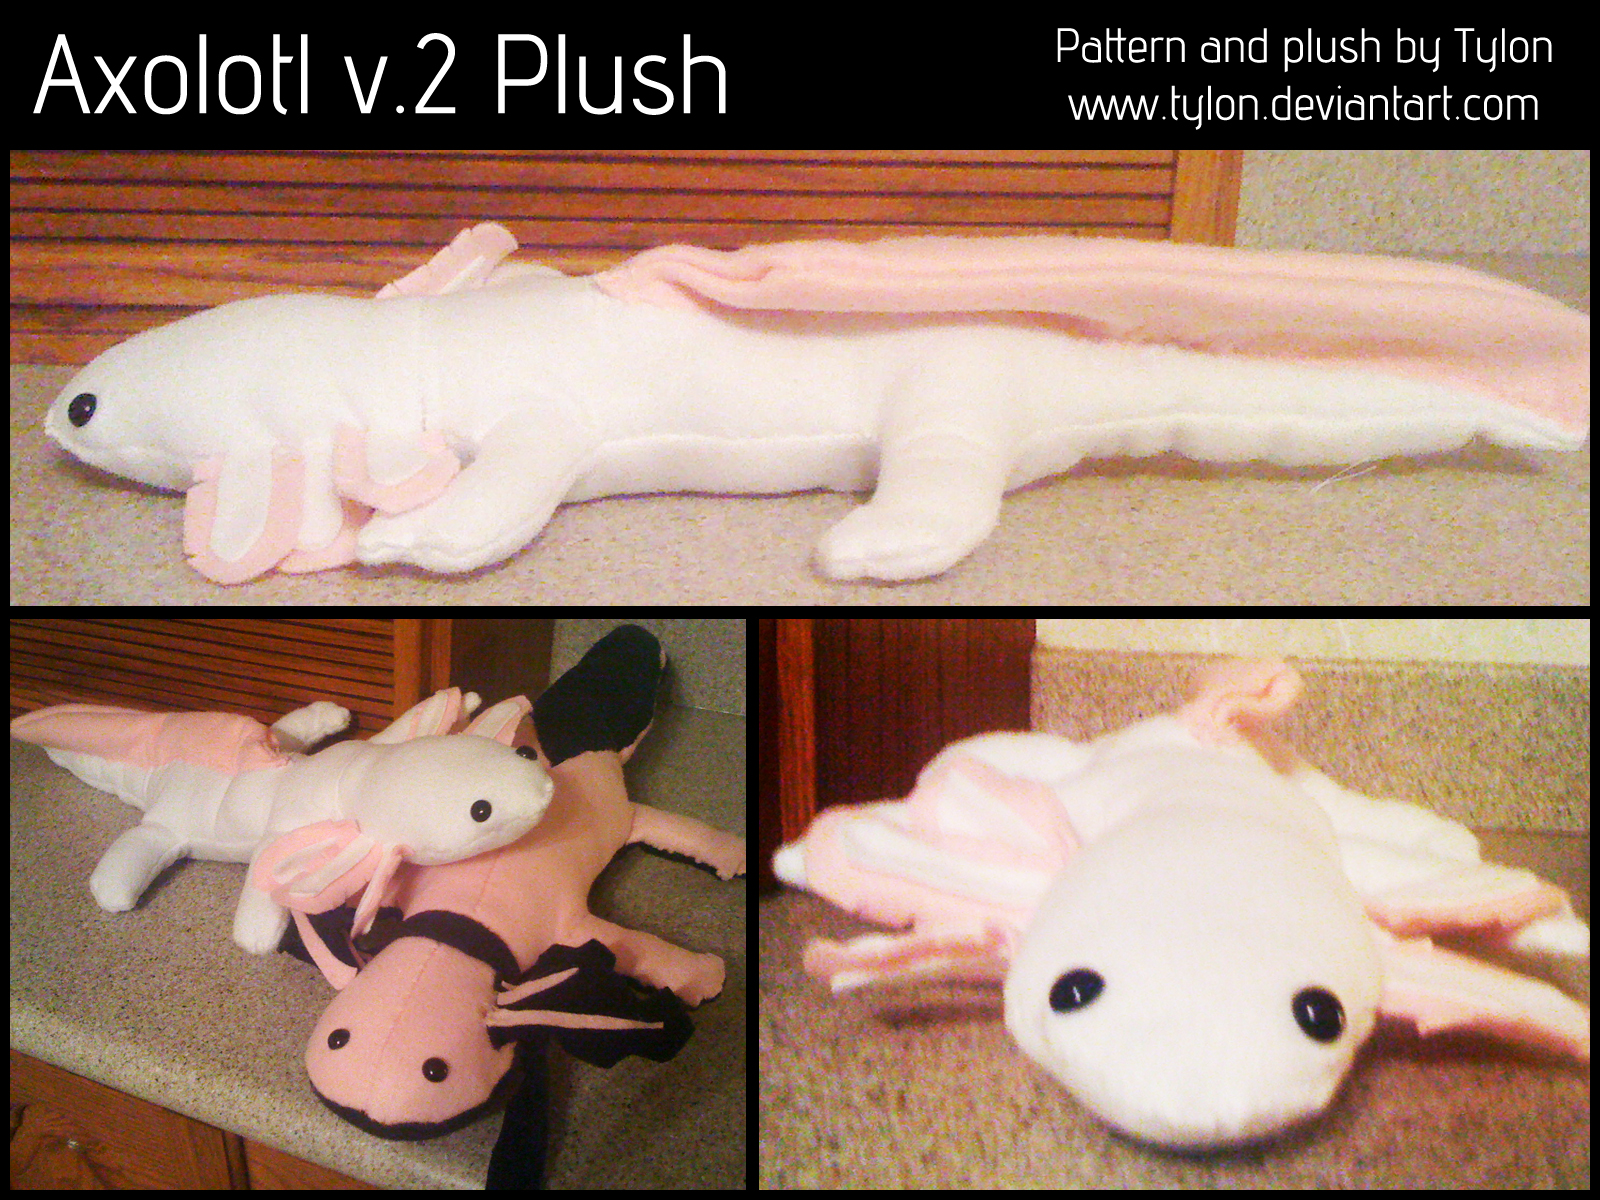 axolotl_2_plush_by_tylon-d36njvr.jpg